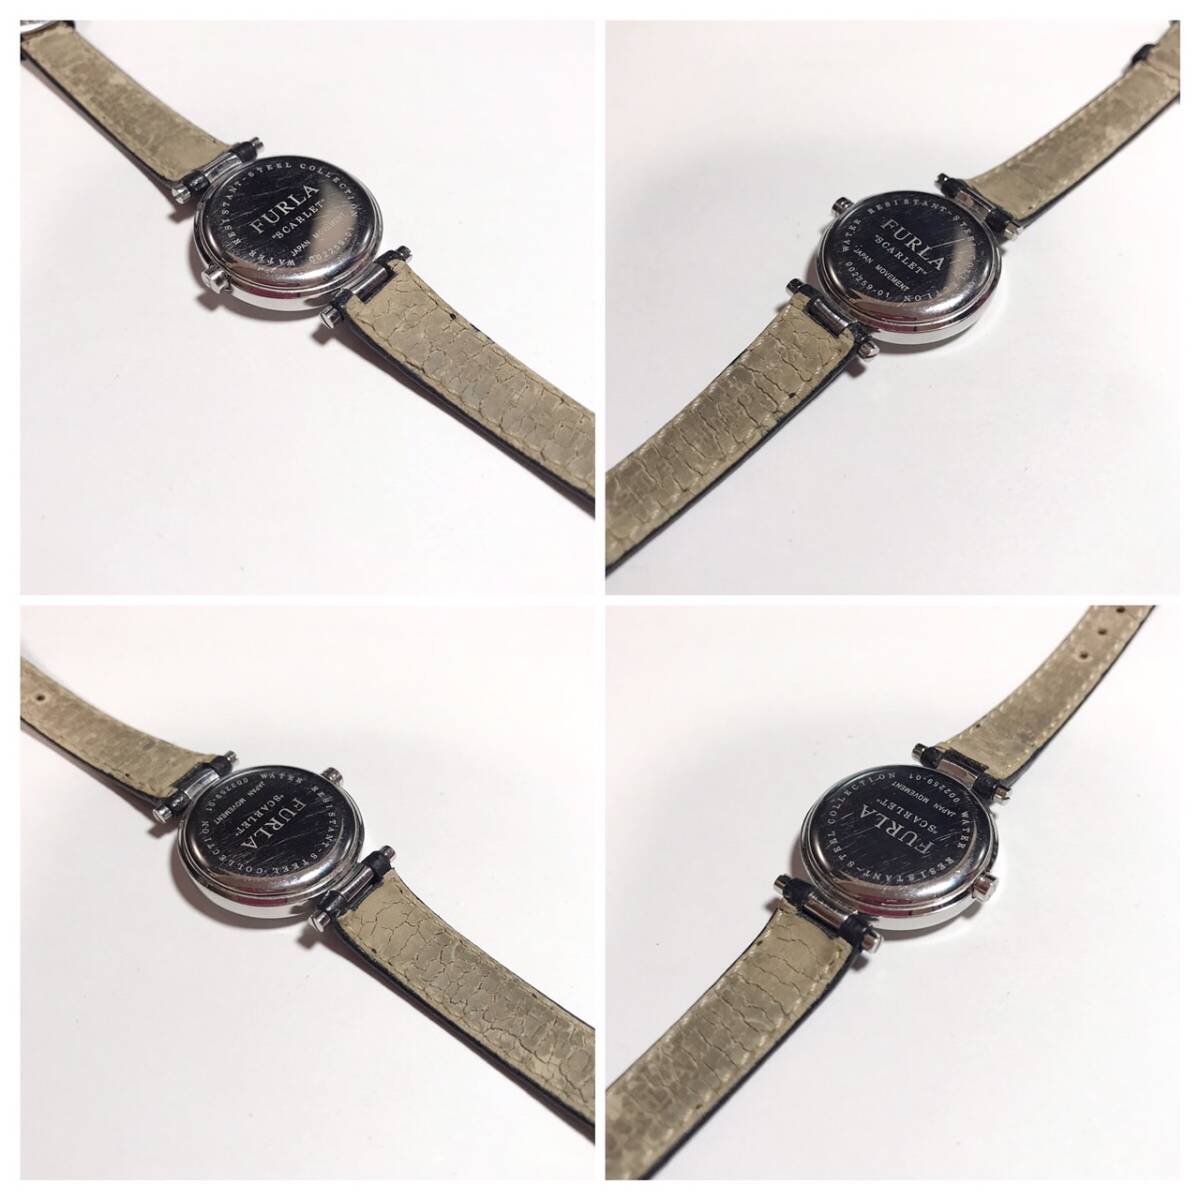 [1 jpy ] clock FURLA Furla SCARLET scarlet 002259-01 QUARTZ quartz 3 hands GENUINE LEATHER original leather watch wristwatch junk treatment 